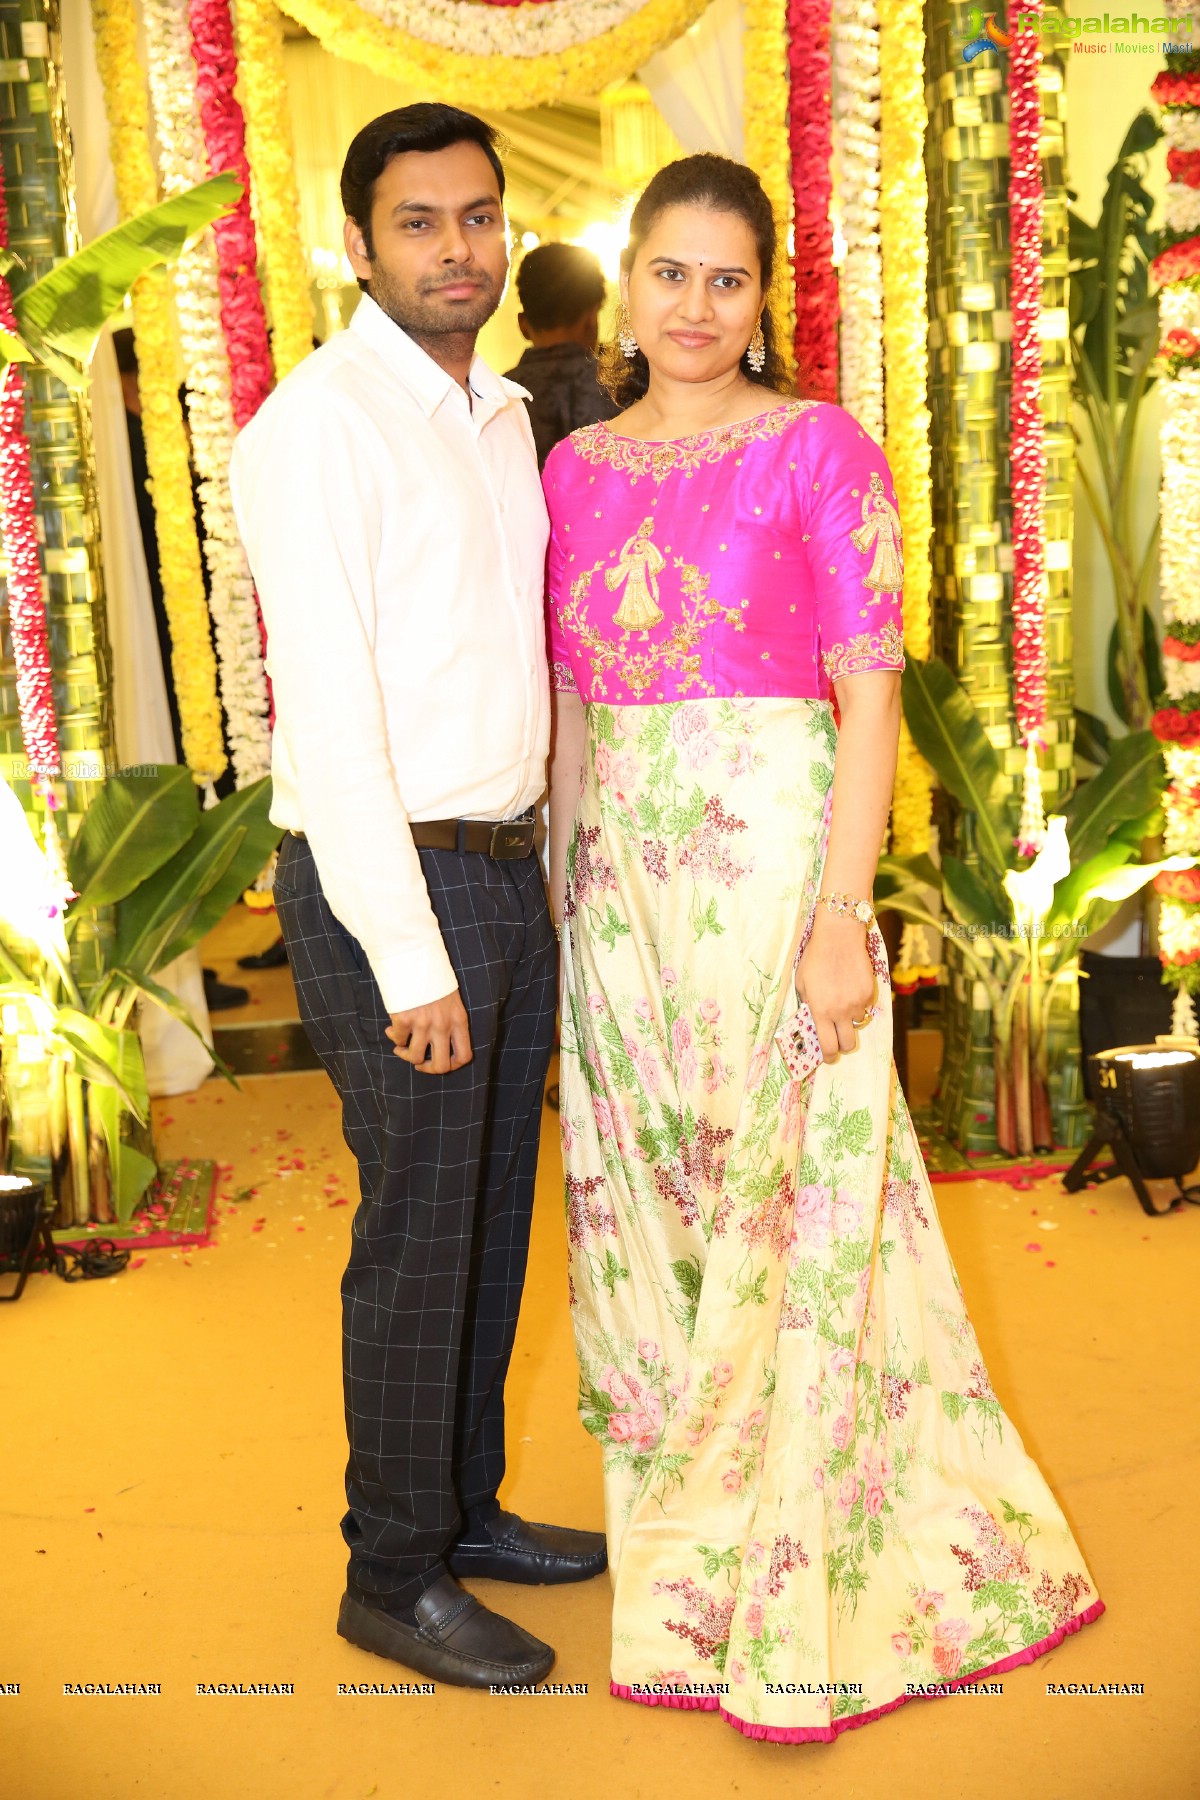 Grand Wedding of Harika with Karteek at N Convention, Hyderabad